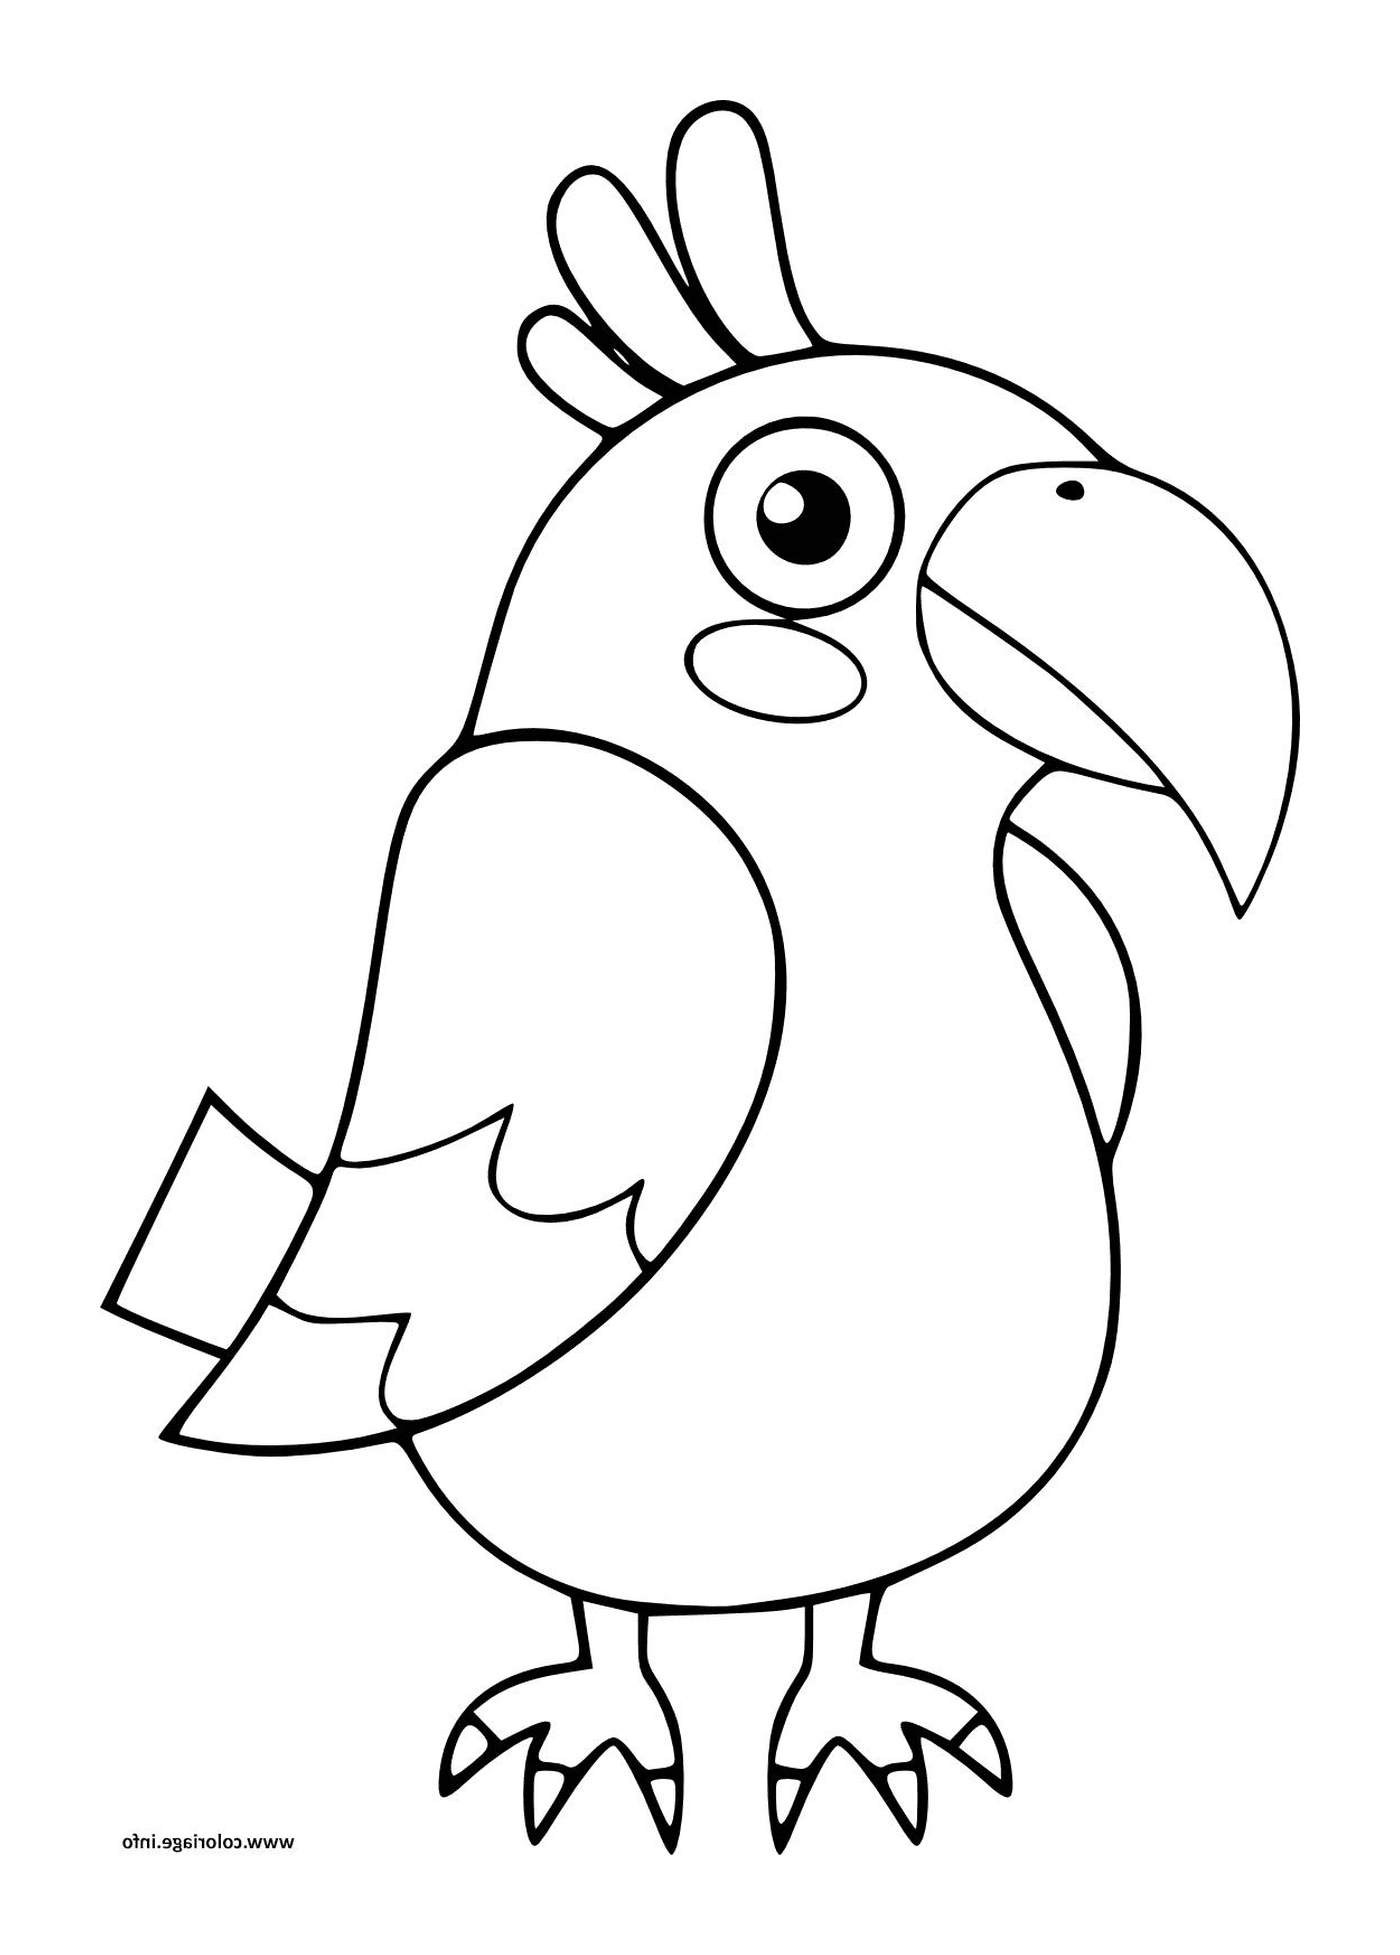  Parrot, uccello per l'asilo 